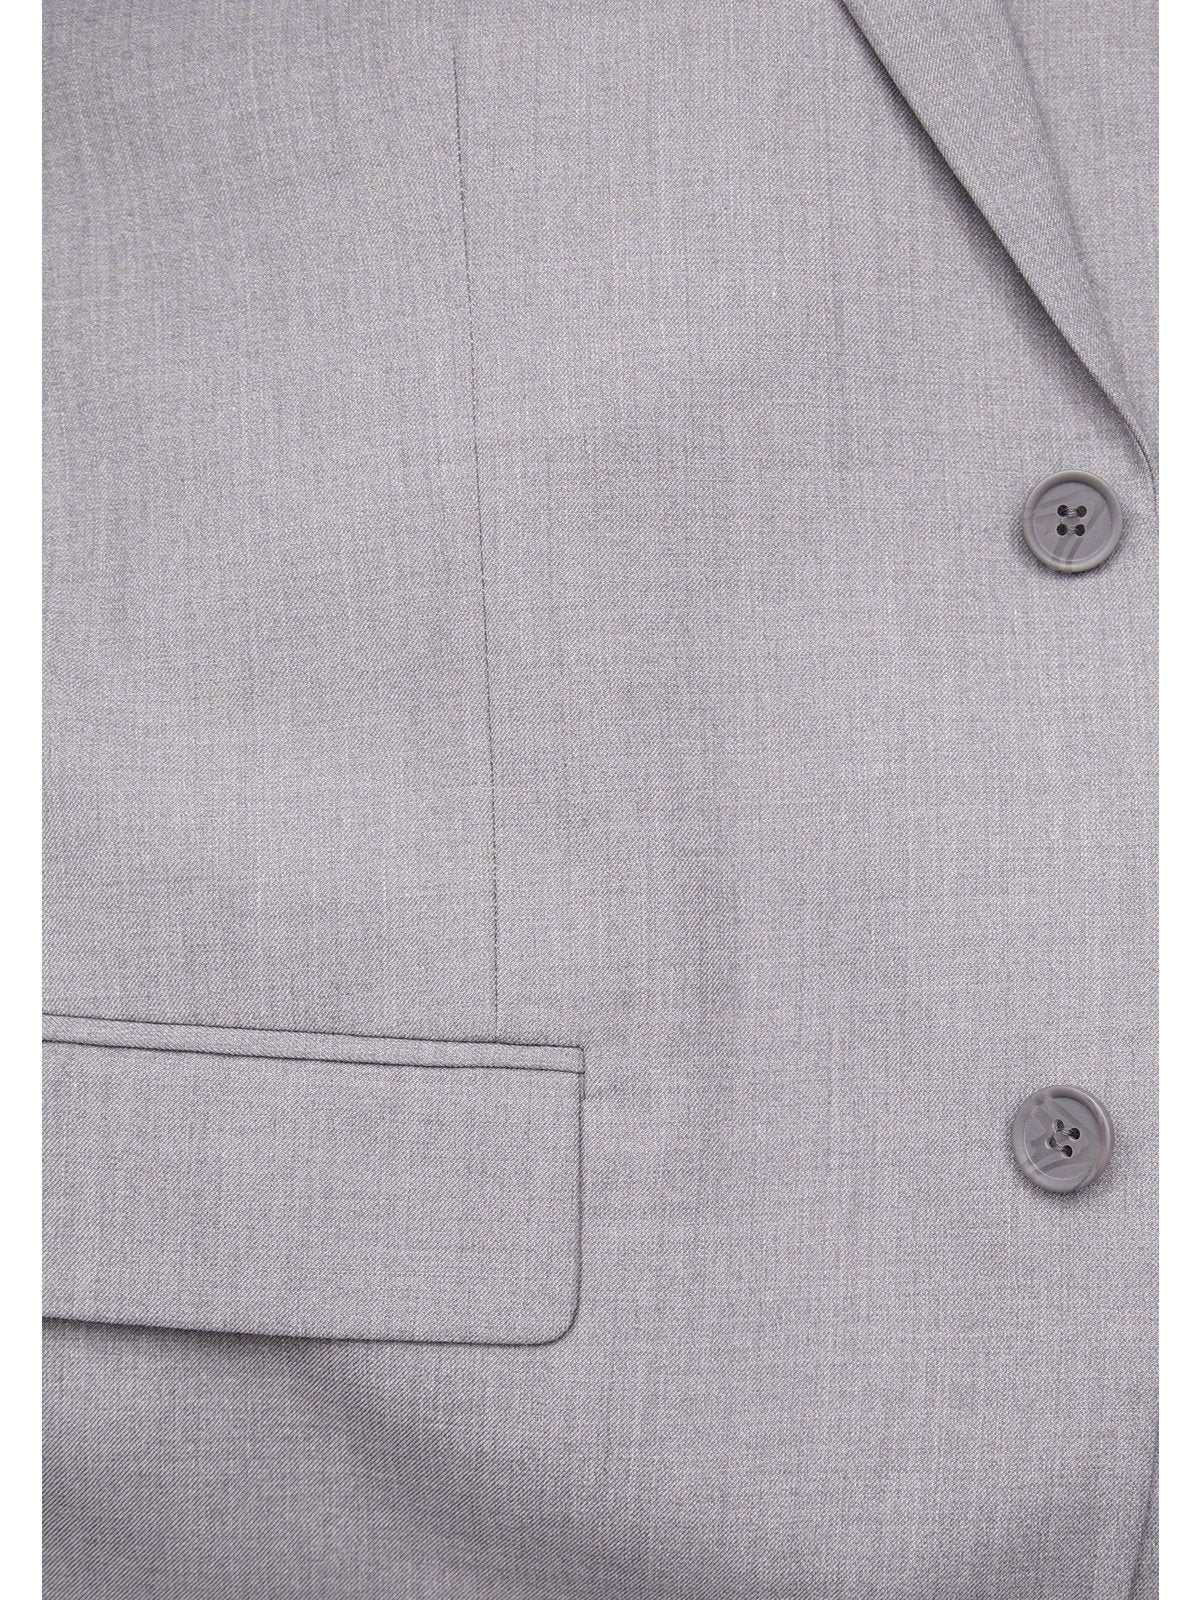 close up of light gray men's suit buttons